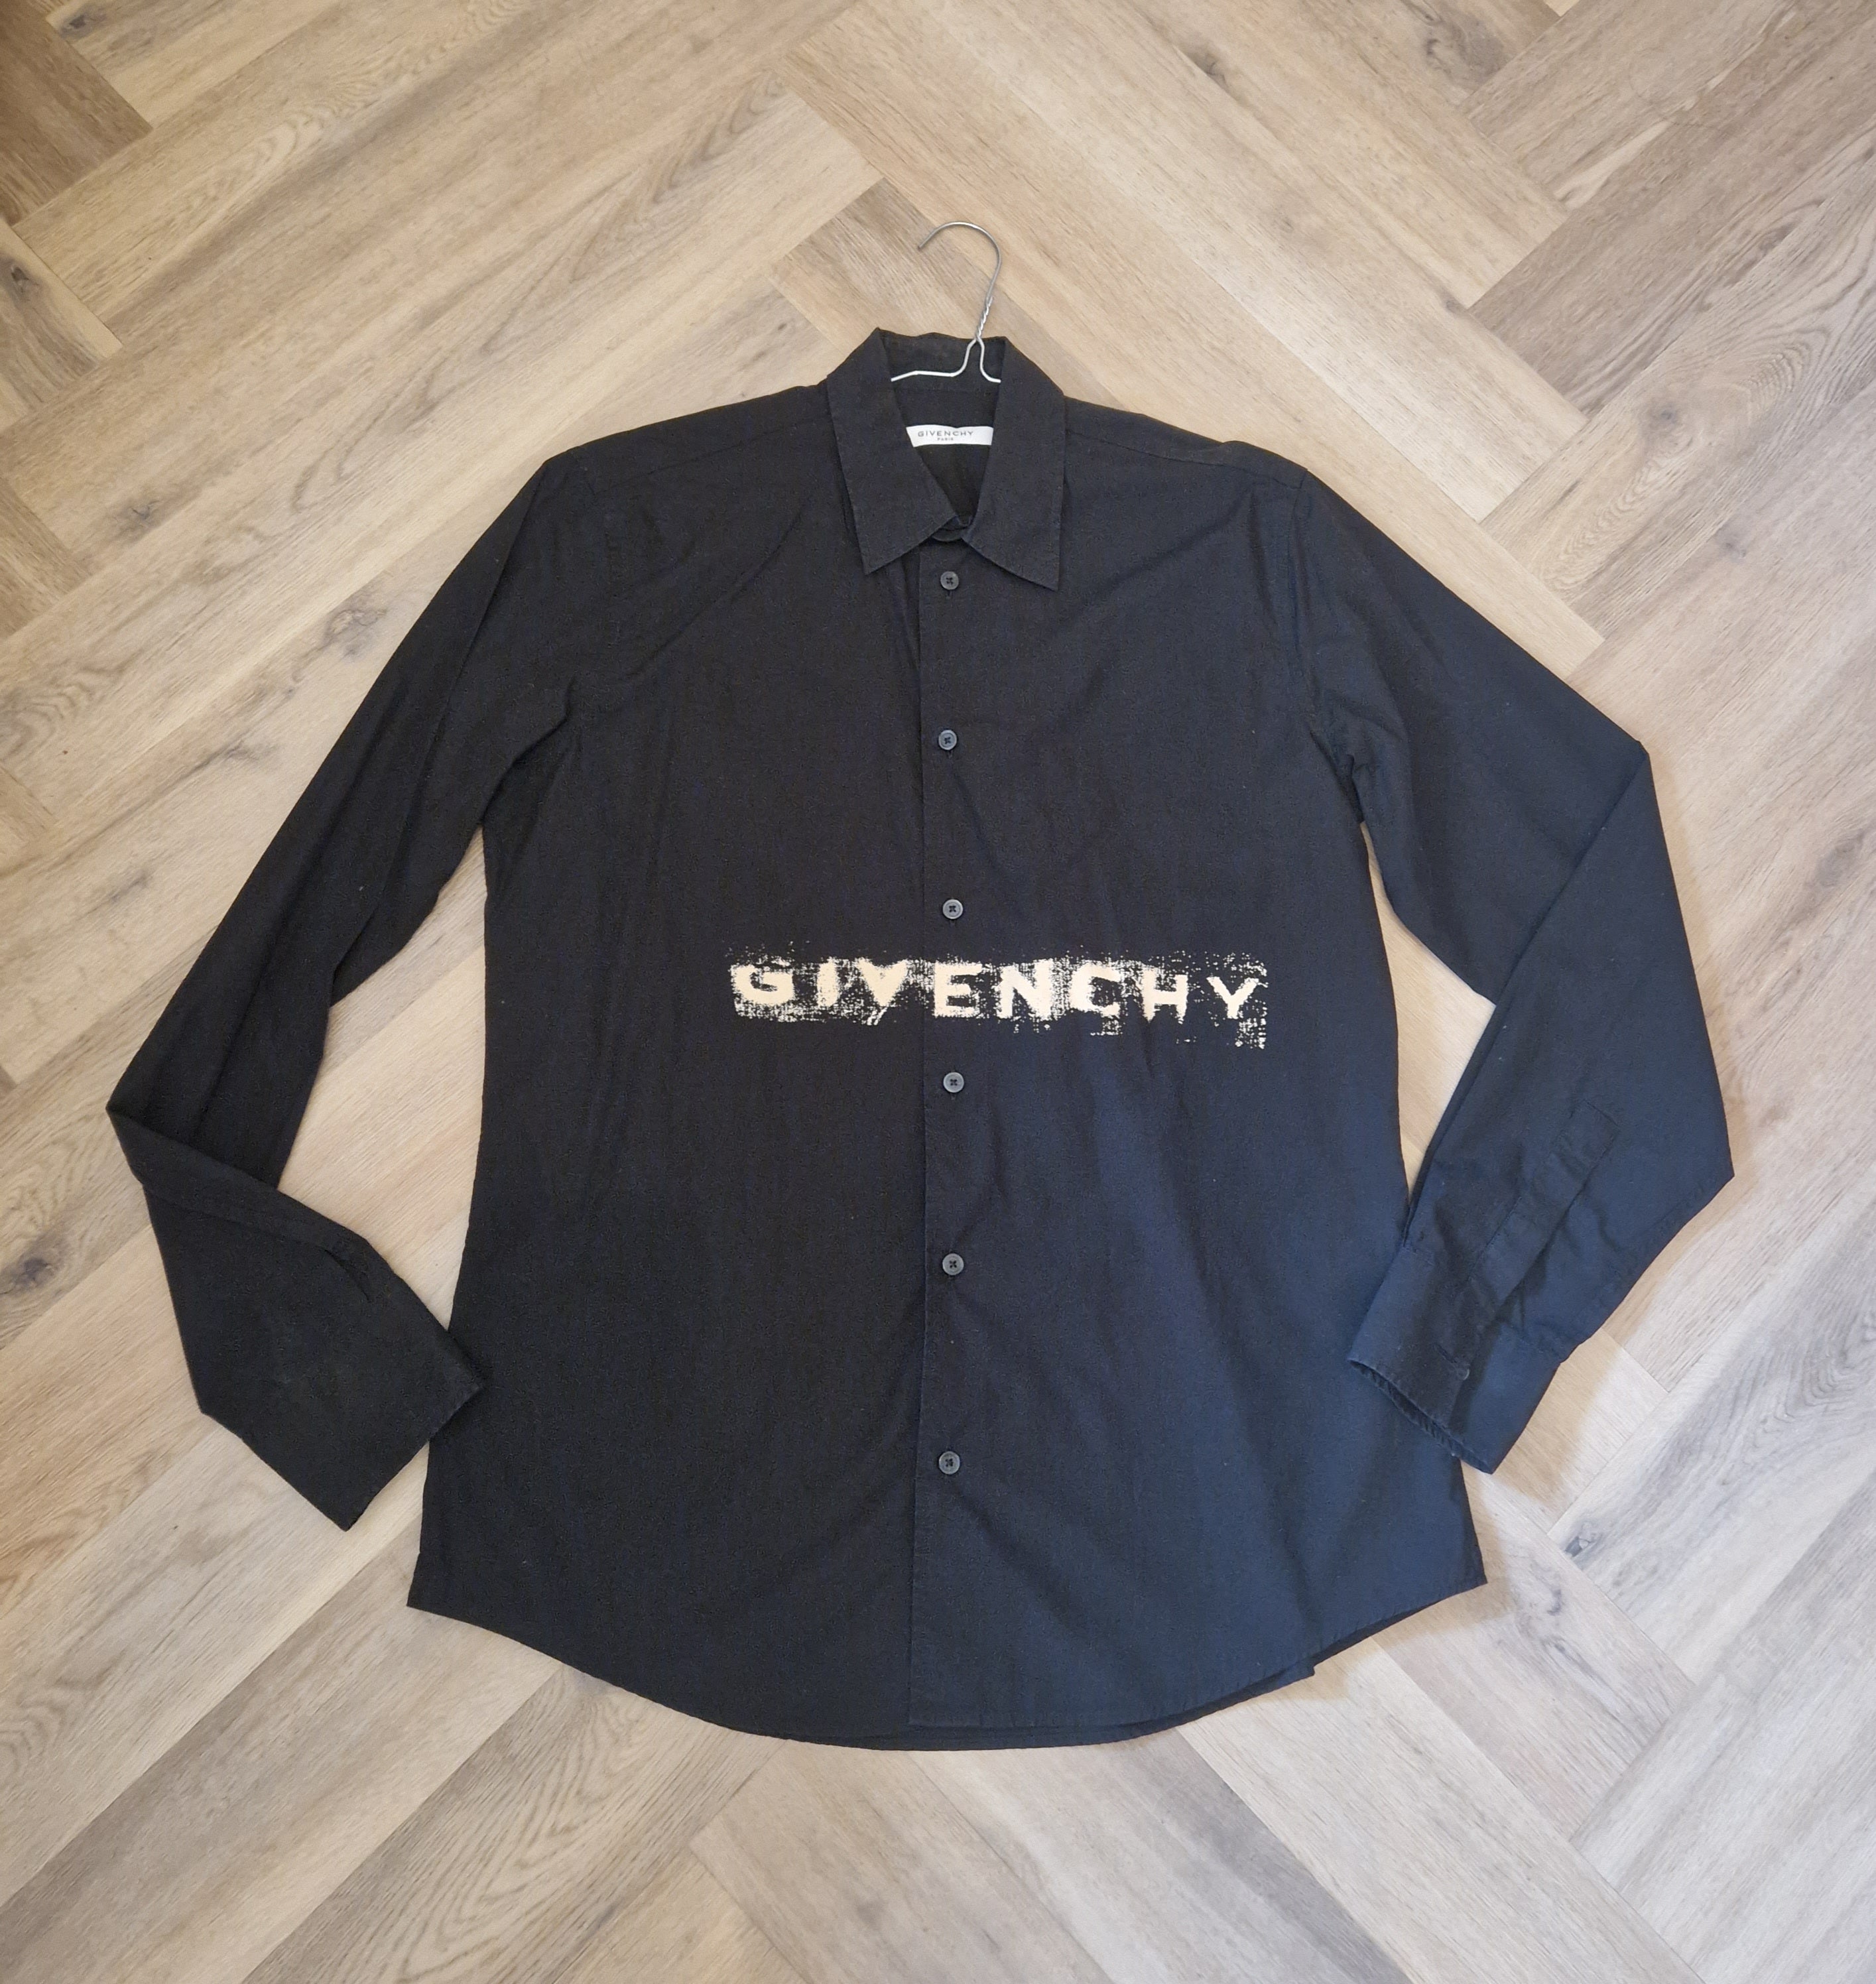 Givenchy Logo Shirt (Worn Once)